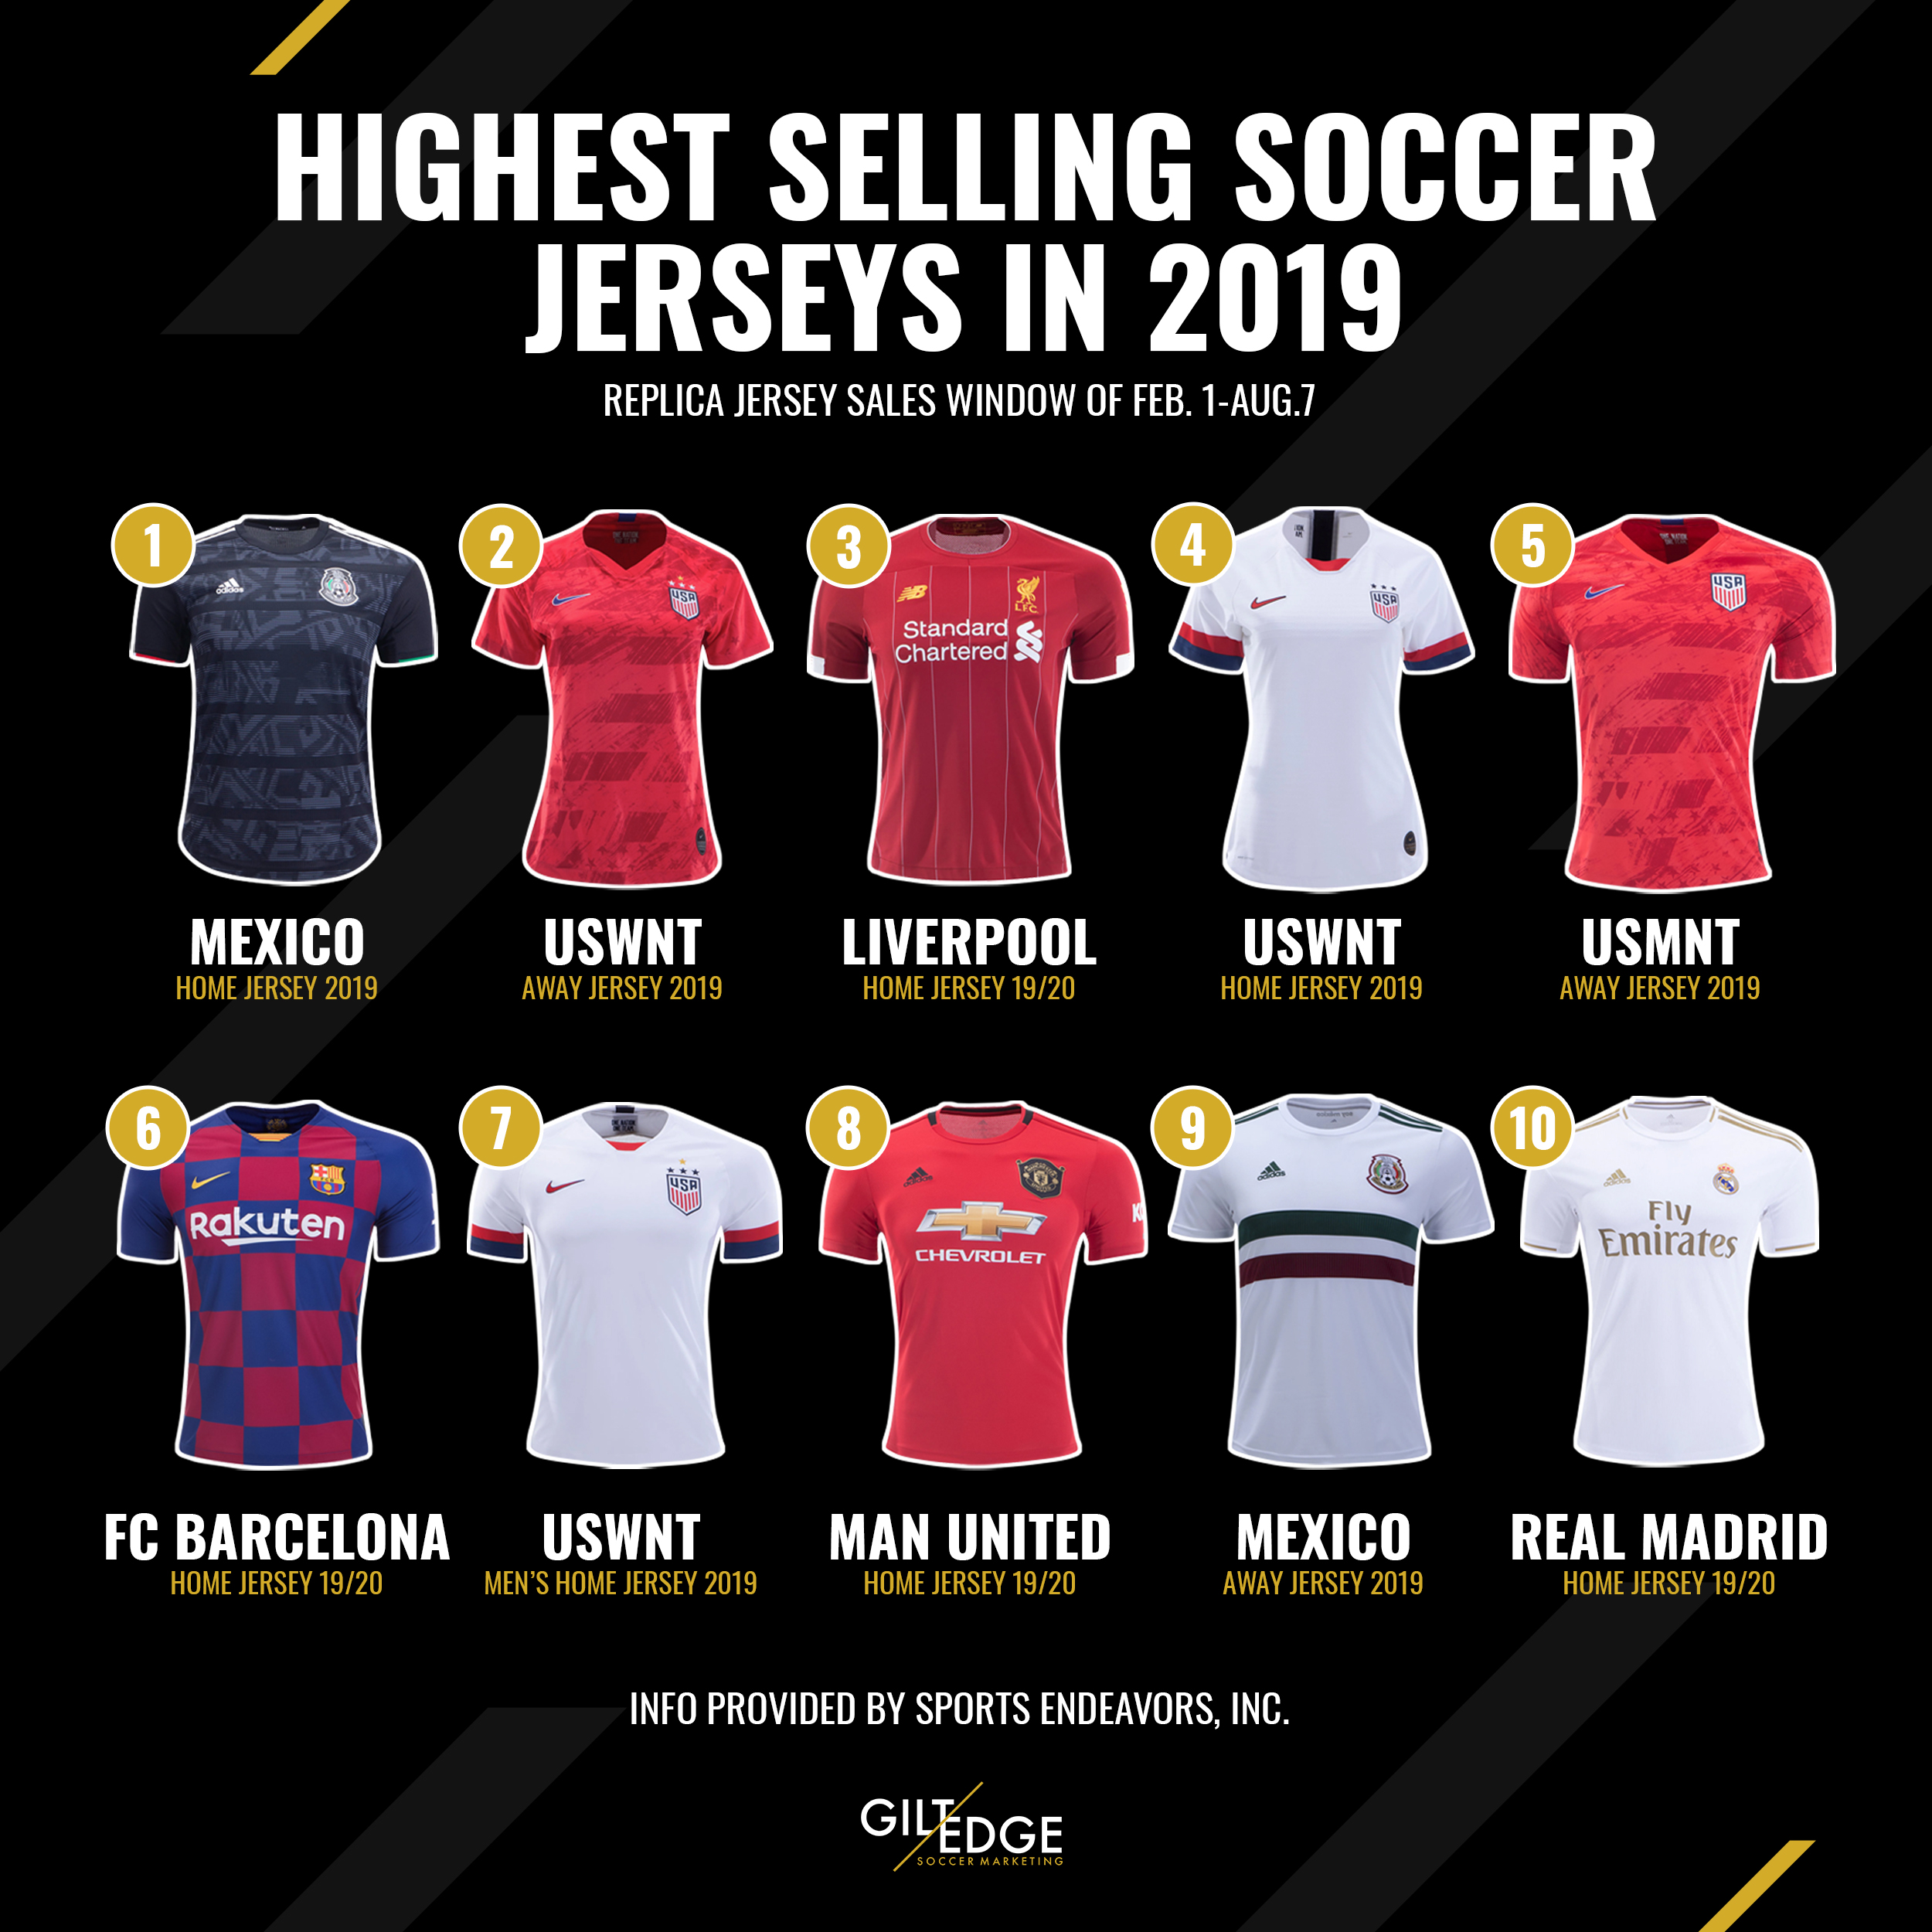 Highest Selling Soccer Jerseys in 2019 